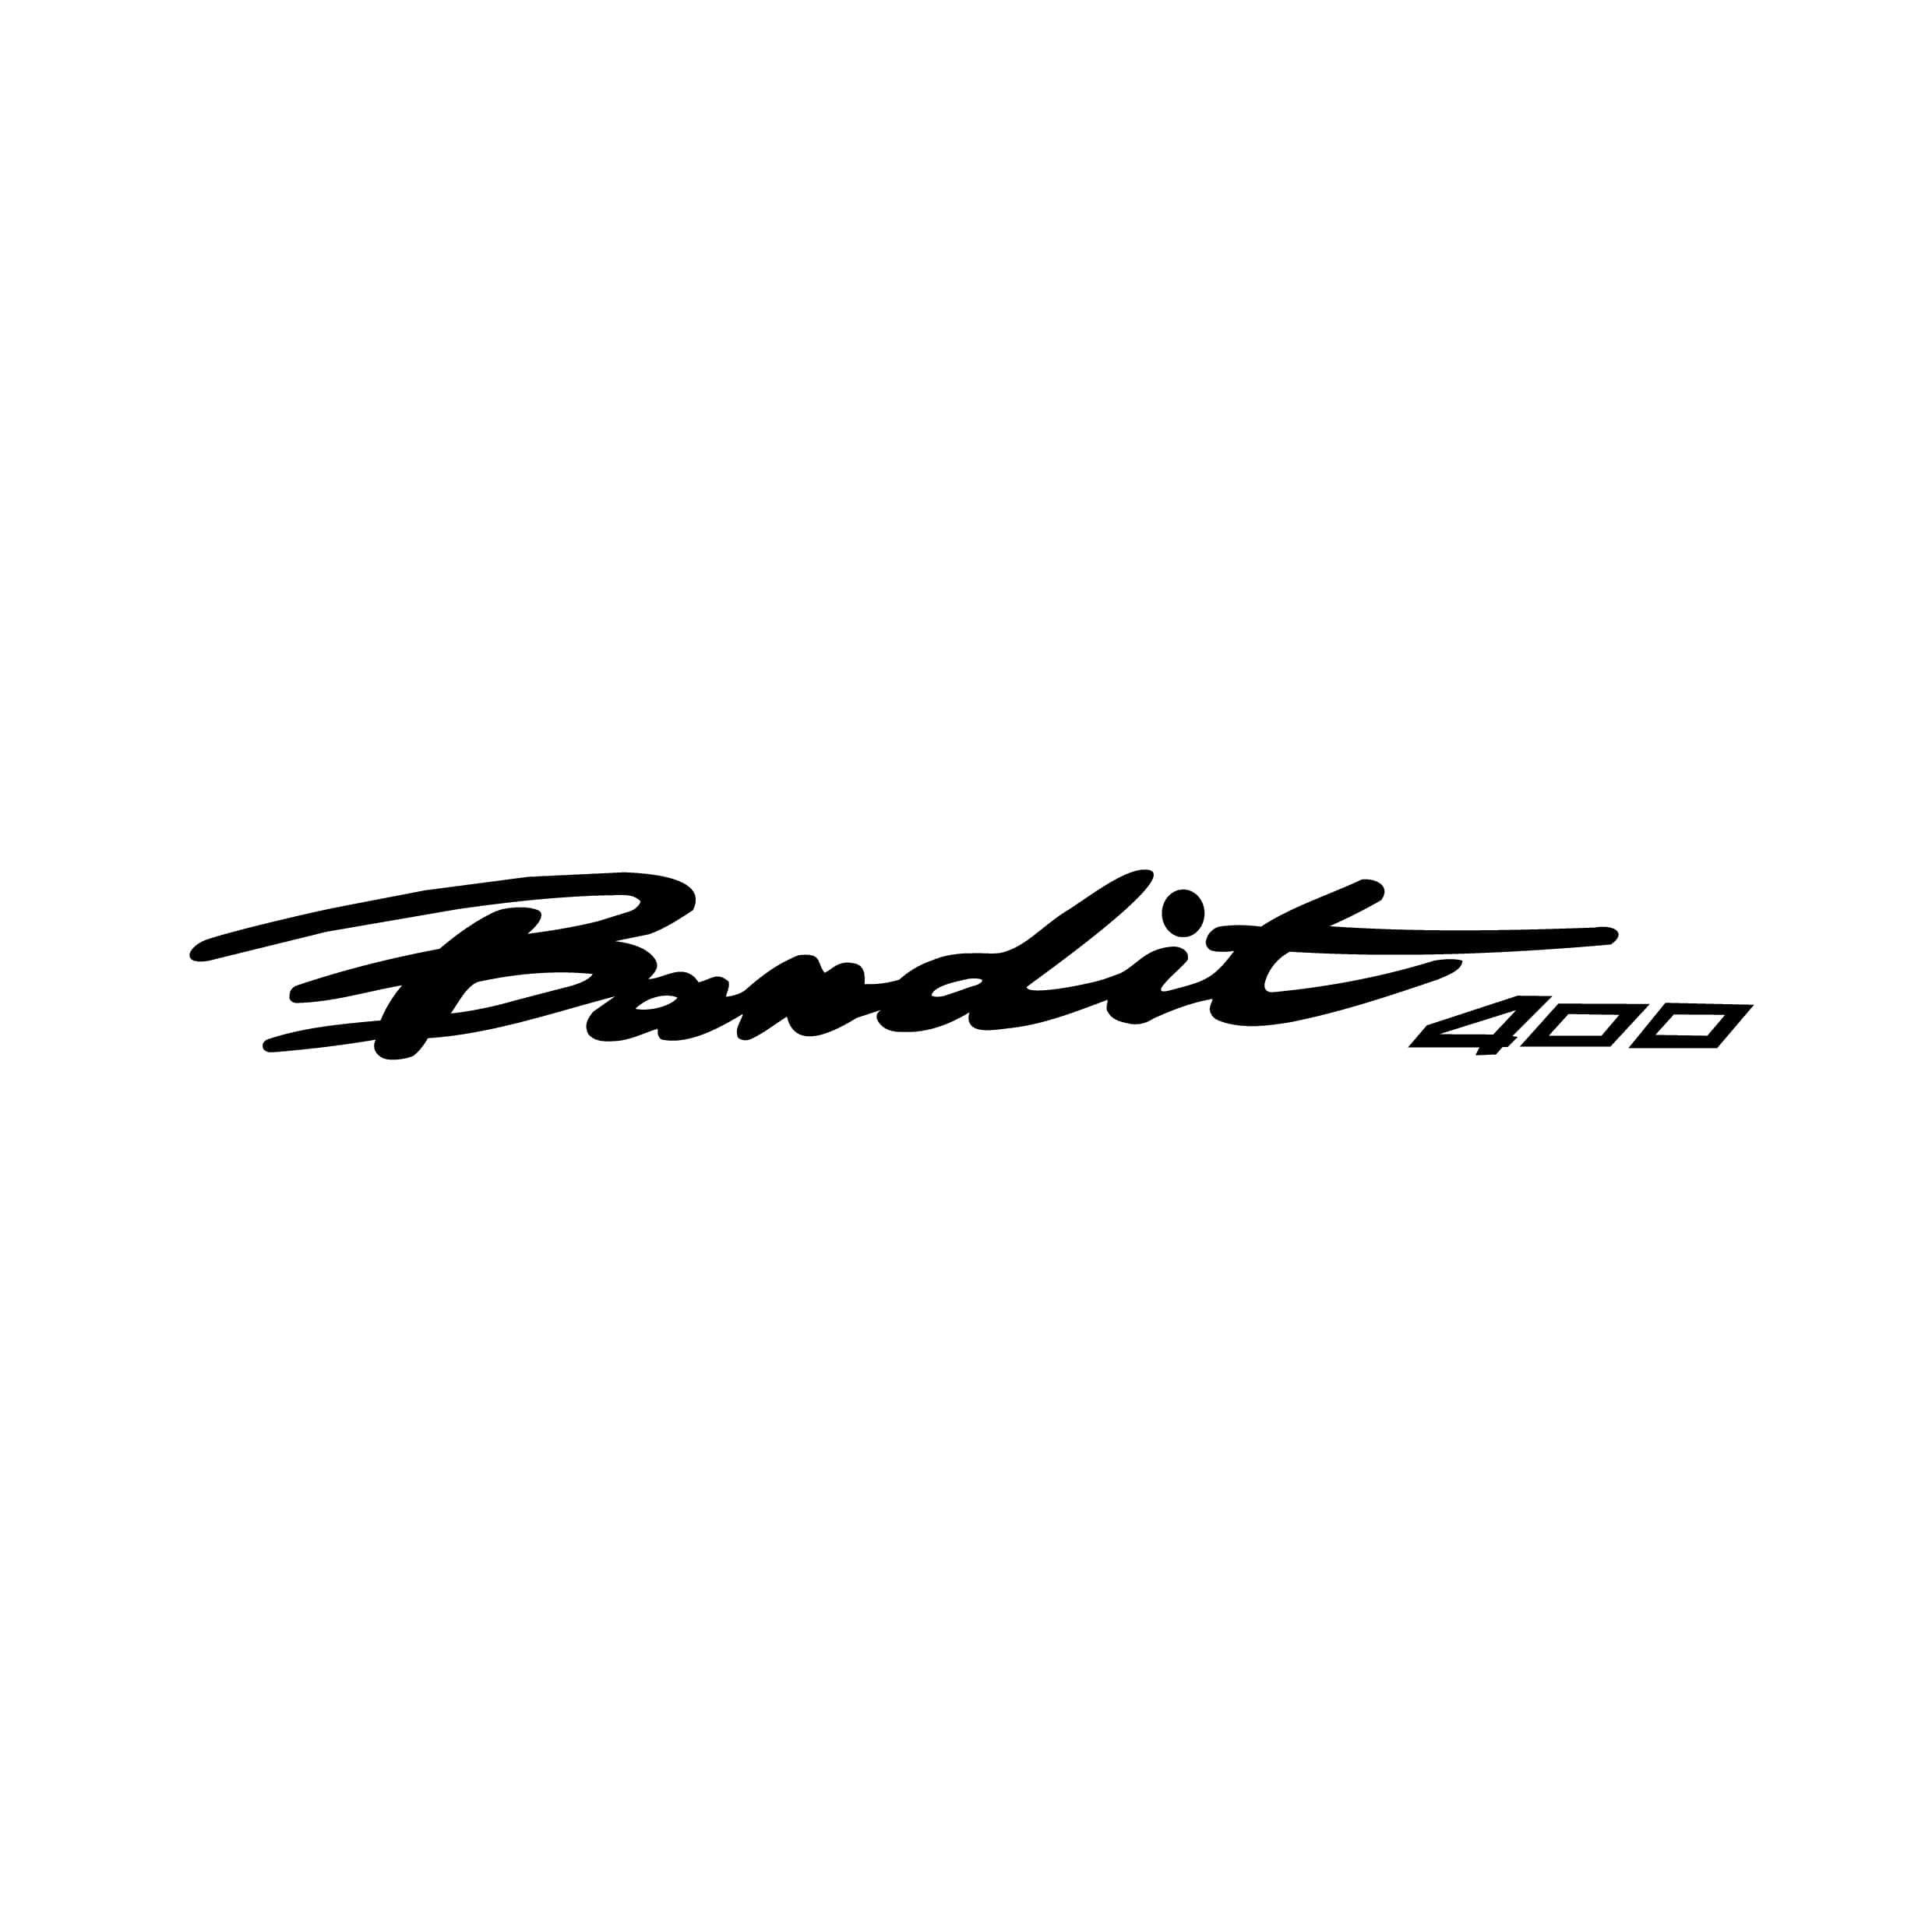 stickers-bandit-400-suzuki-ref59-autocollant-moto-sticker-deux-roue-autocollants-decals-sponsors-tuning-sport-logo-bike-scooter-min